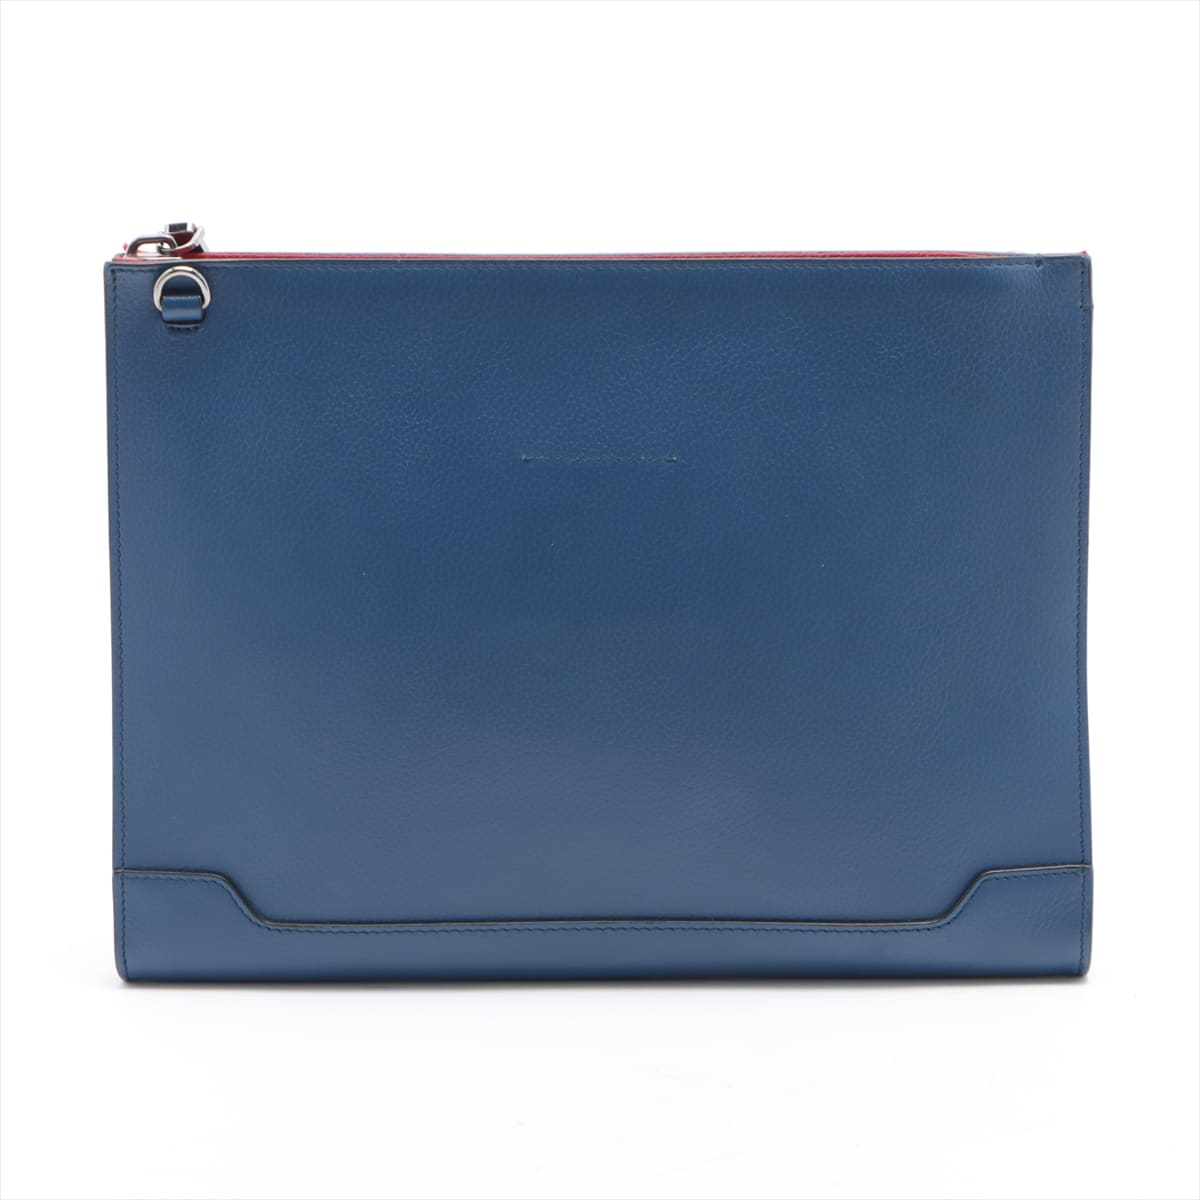 Christian Louboutin Leather Clutch bag Blue